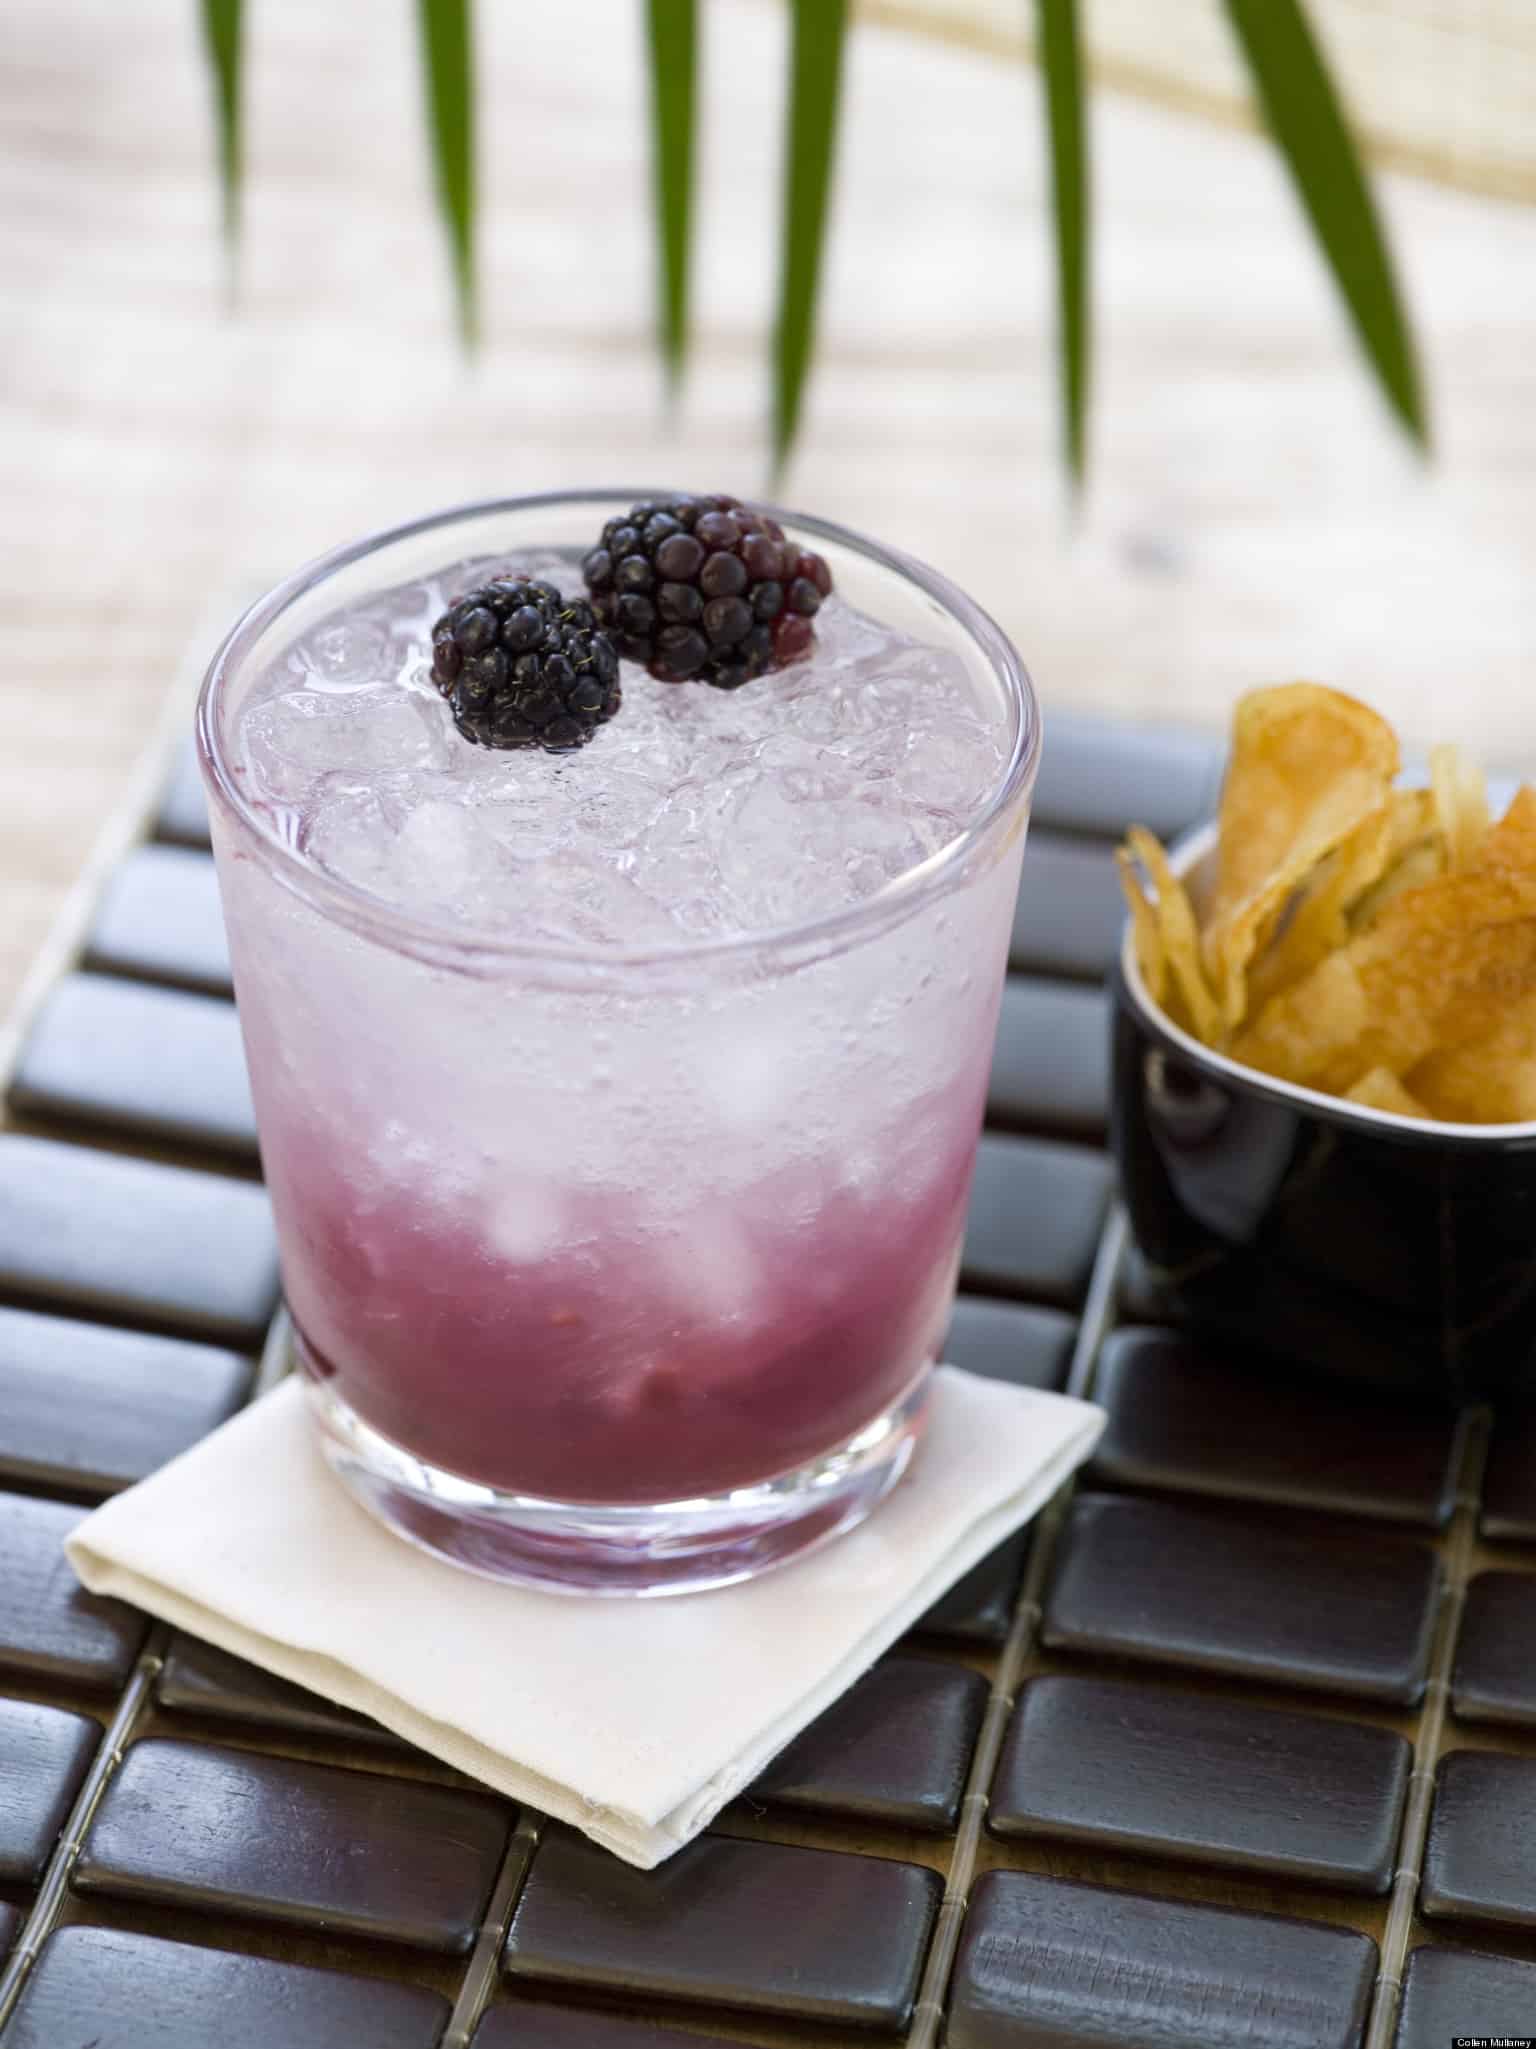 Blackberry cocktail with a blackberry garnish